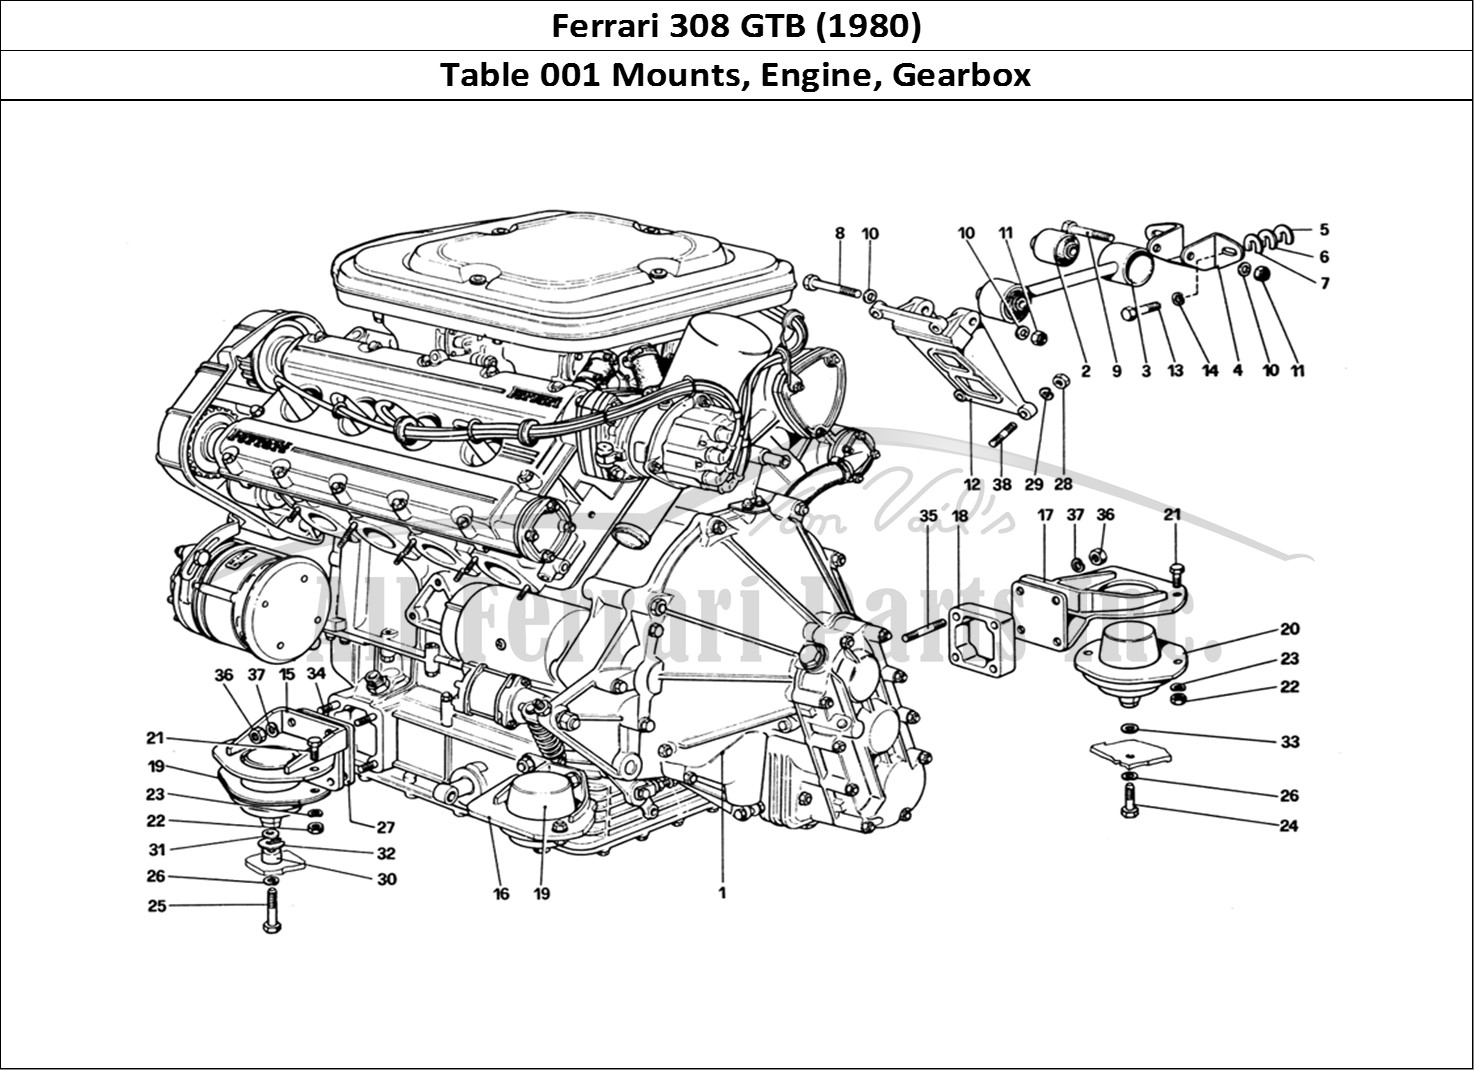 Ferrari Parts Ferrari 308 GTB (1980) Page 001 Engine - Gearbox and Supp